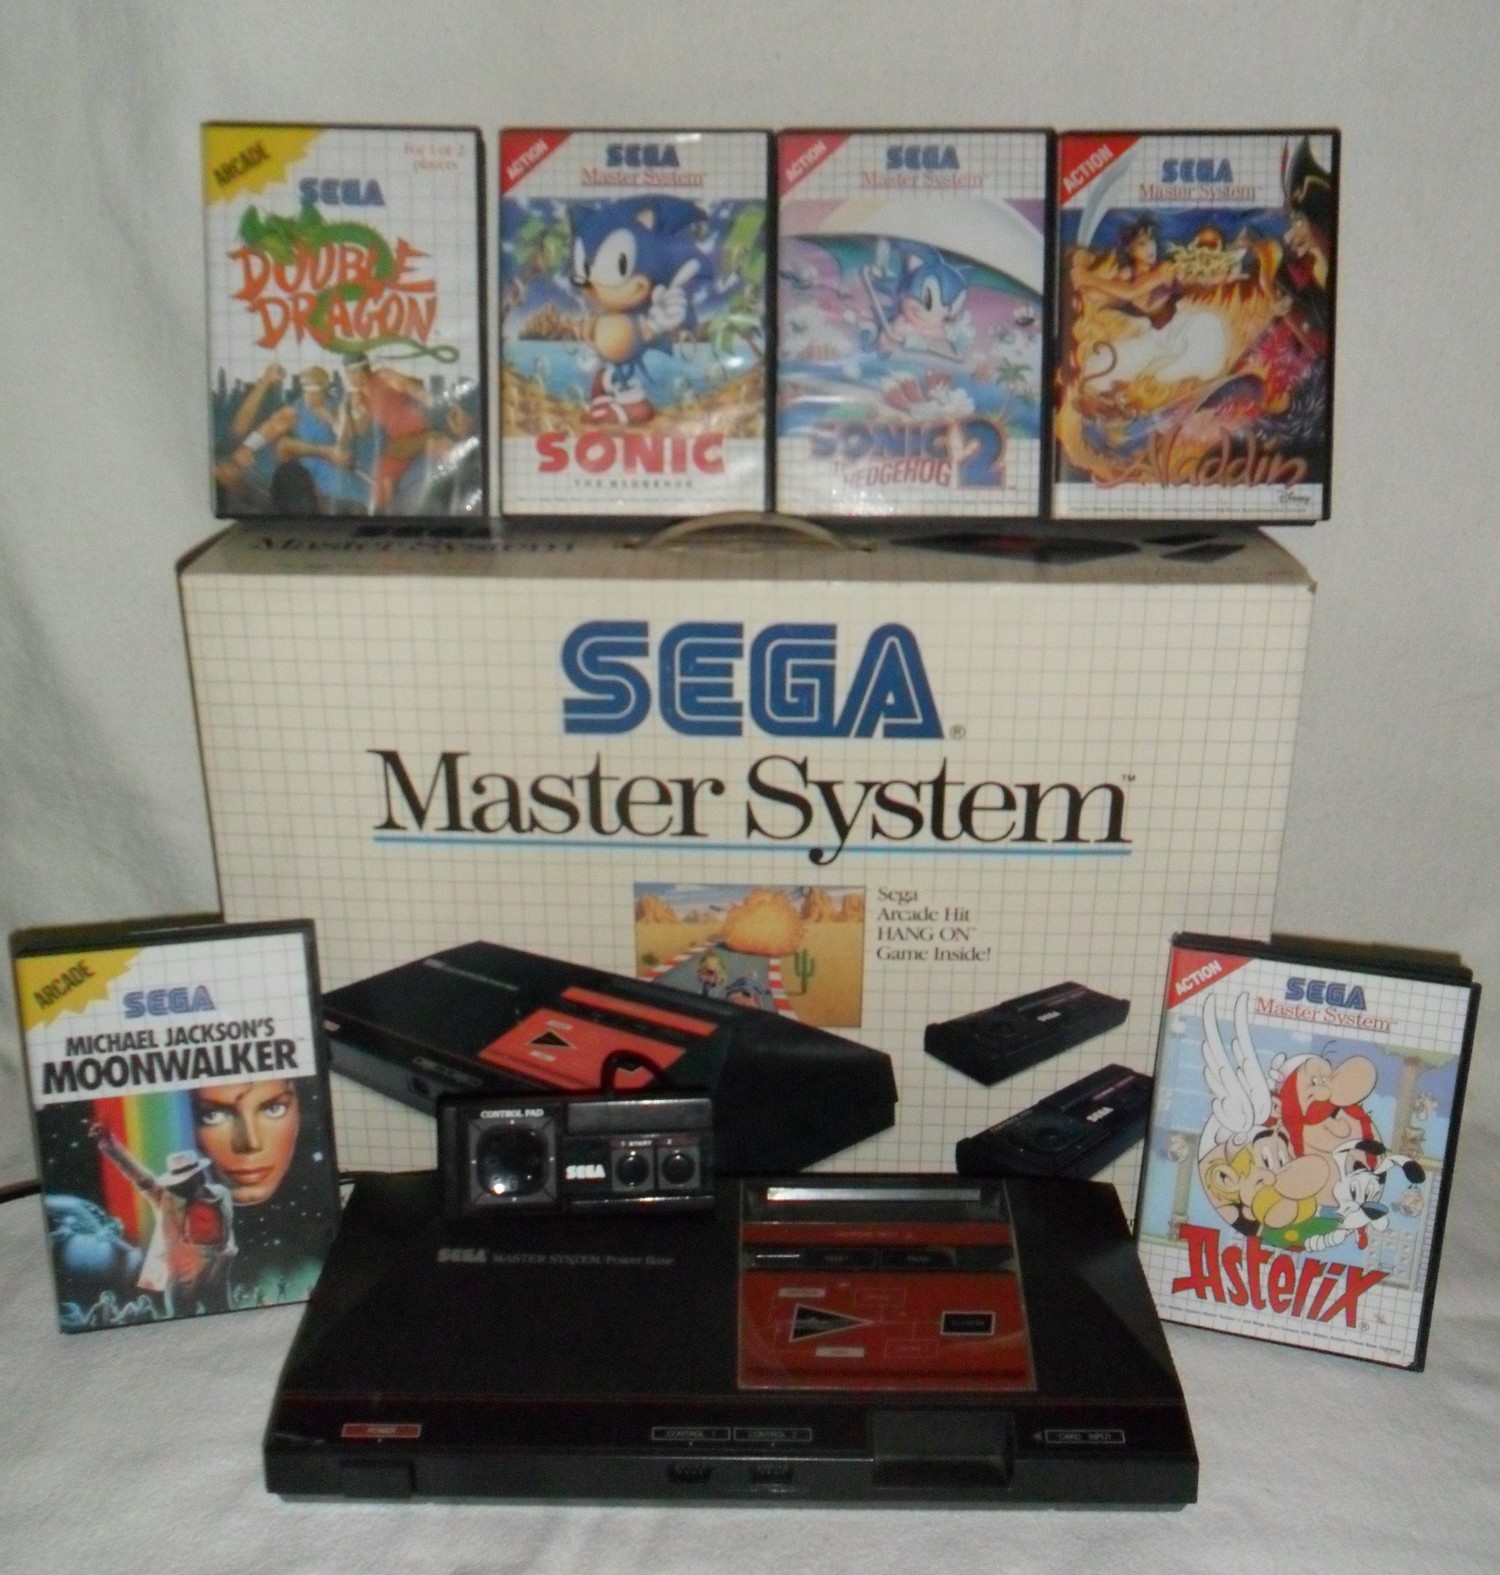 Une partie de ma collection Sega Master System